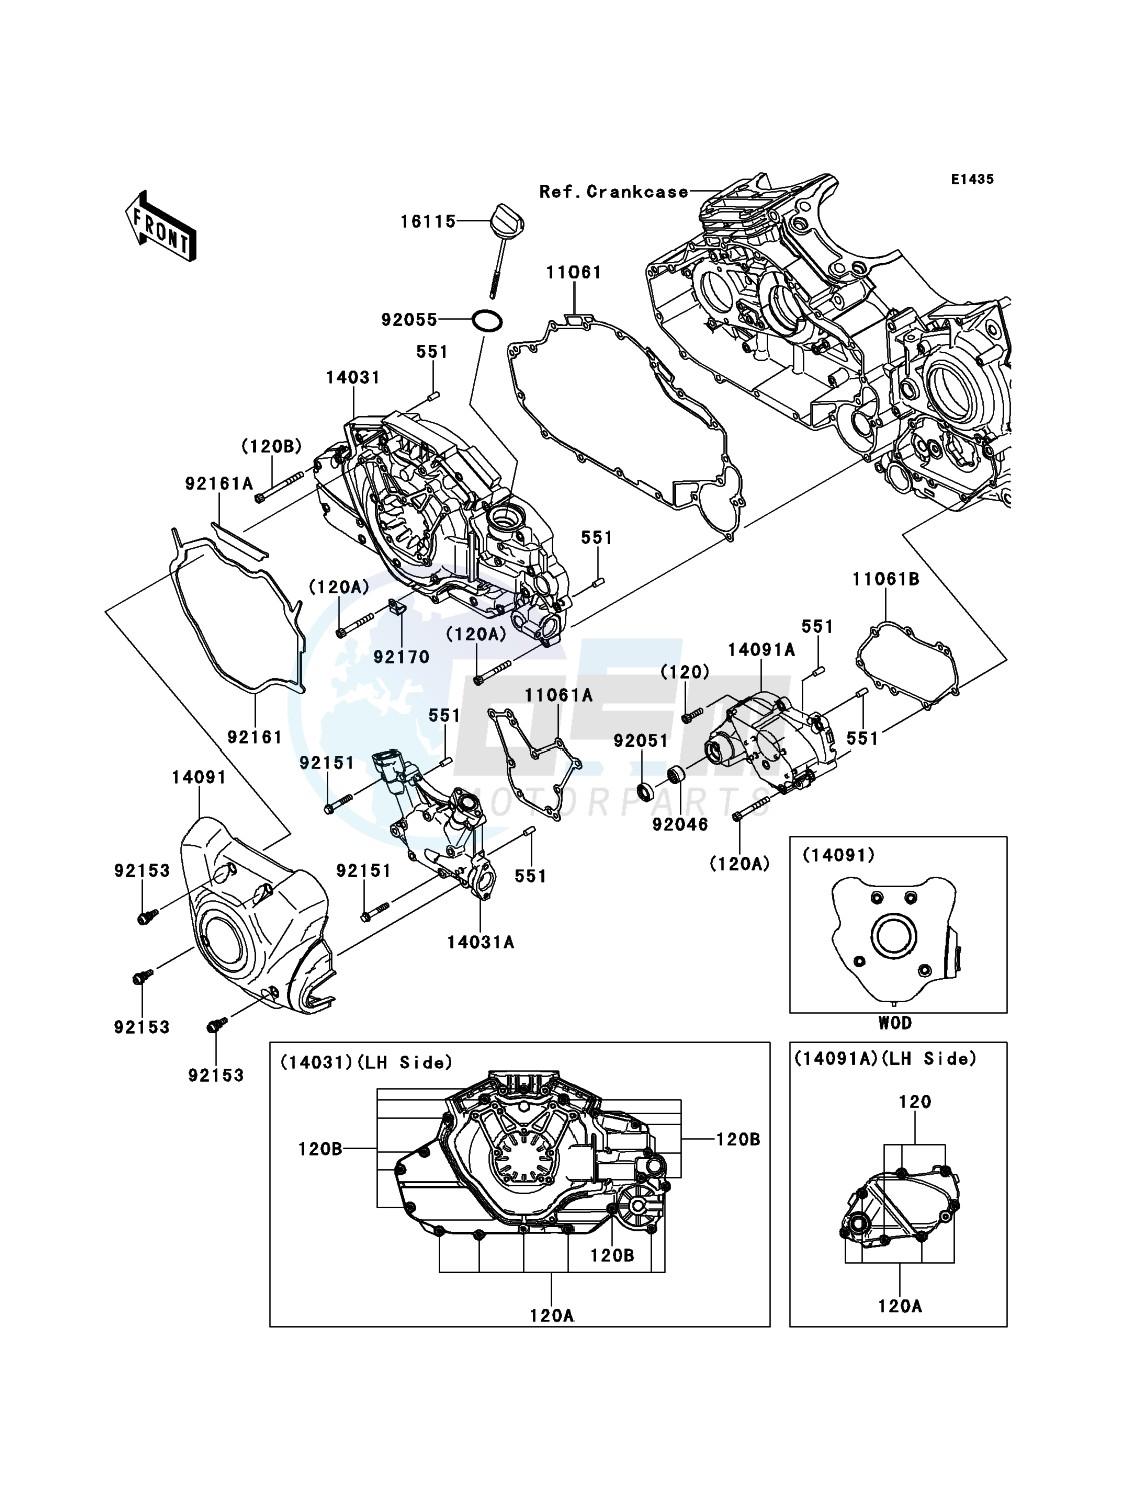 Left Engine Cover(s) blueprint